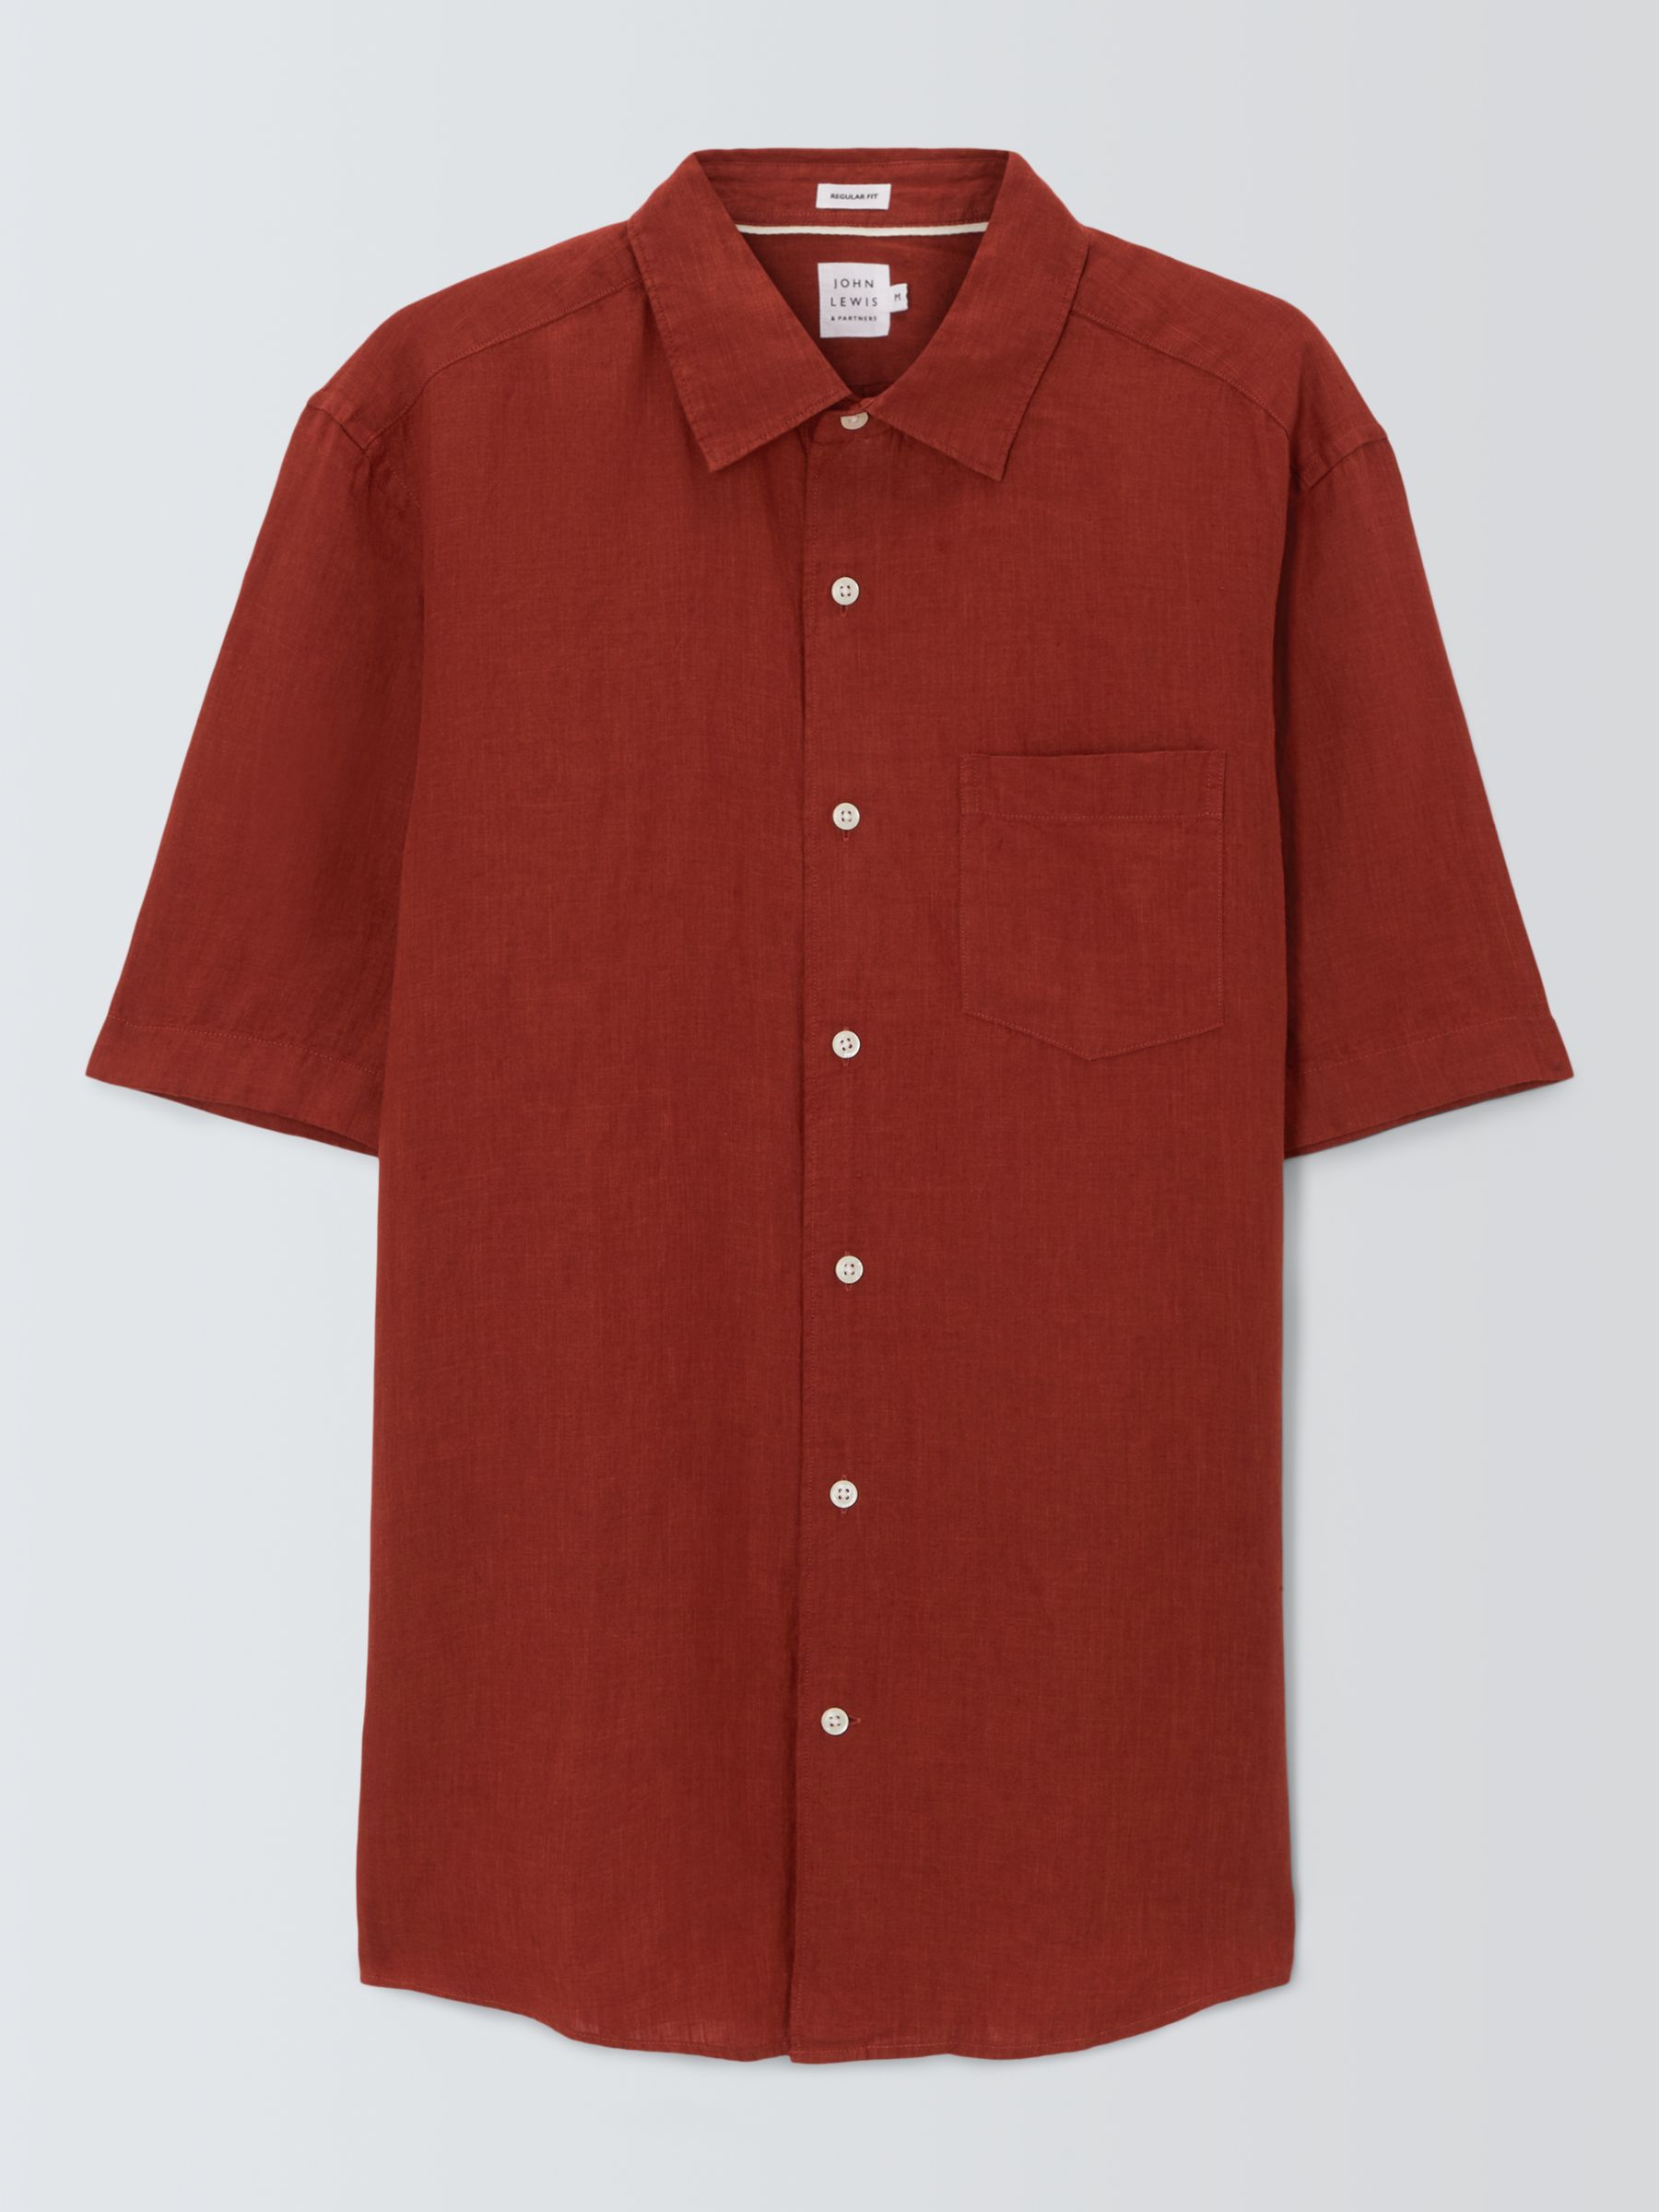 John Lewis Linen Short Sleeve Shirt, Arabian Spice, S